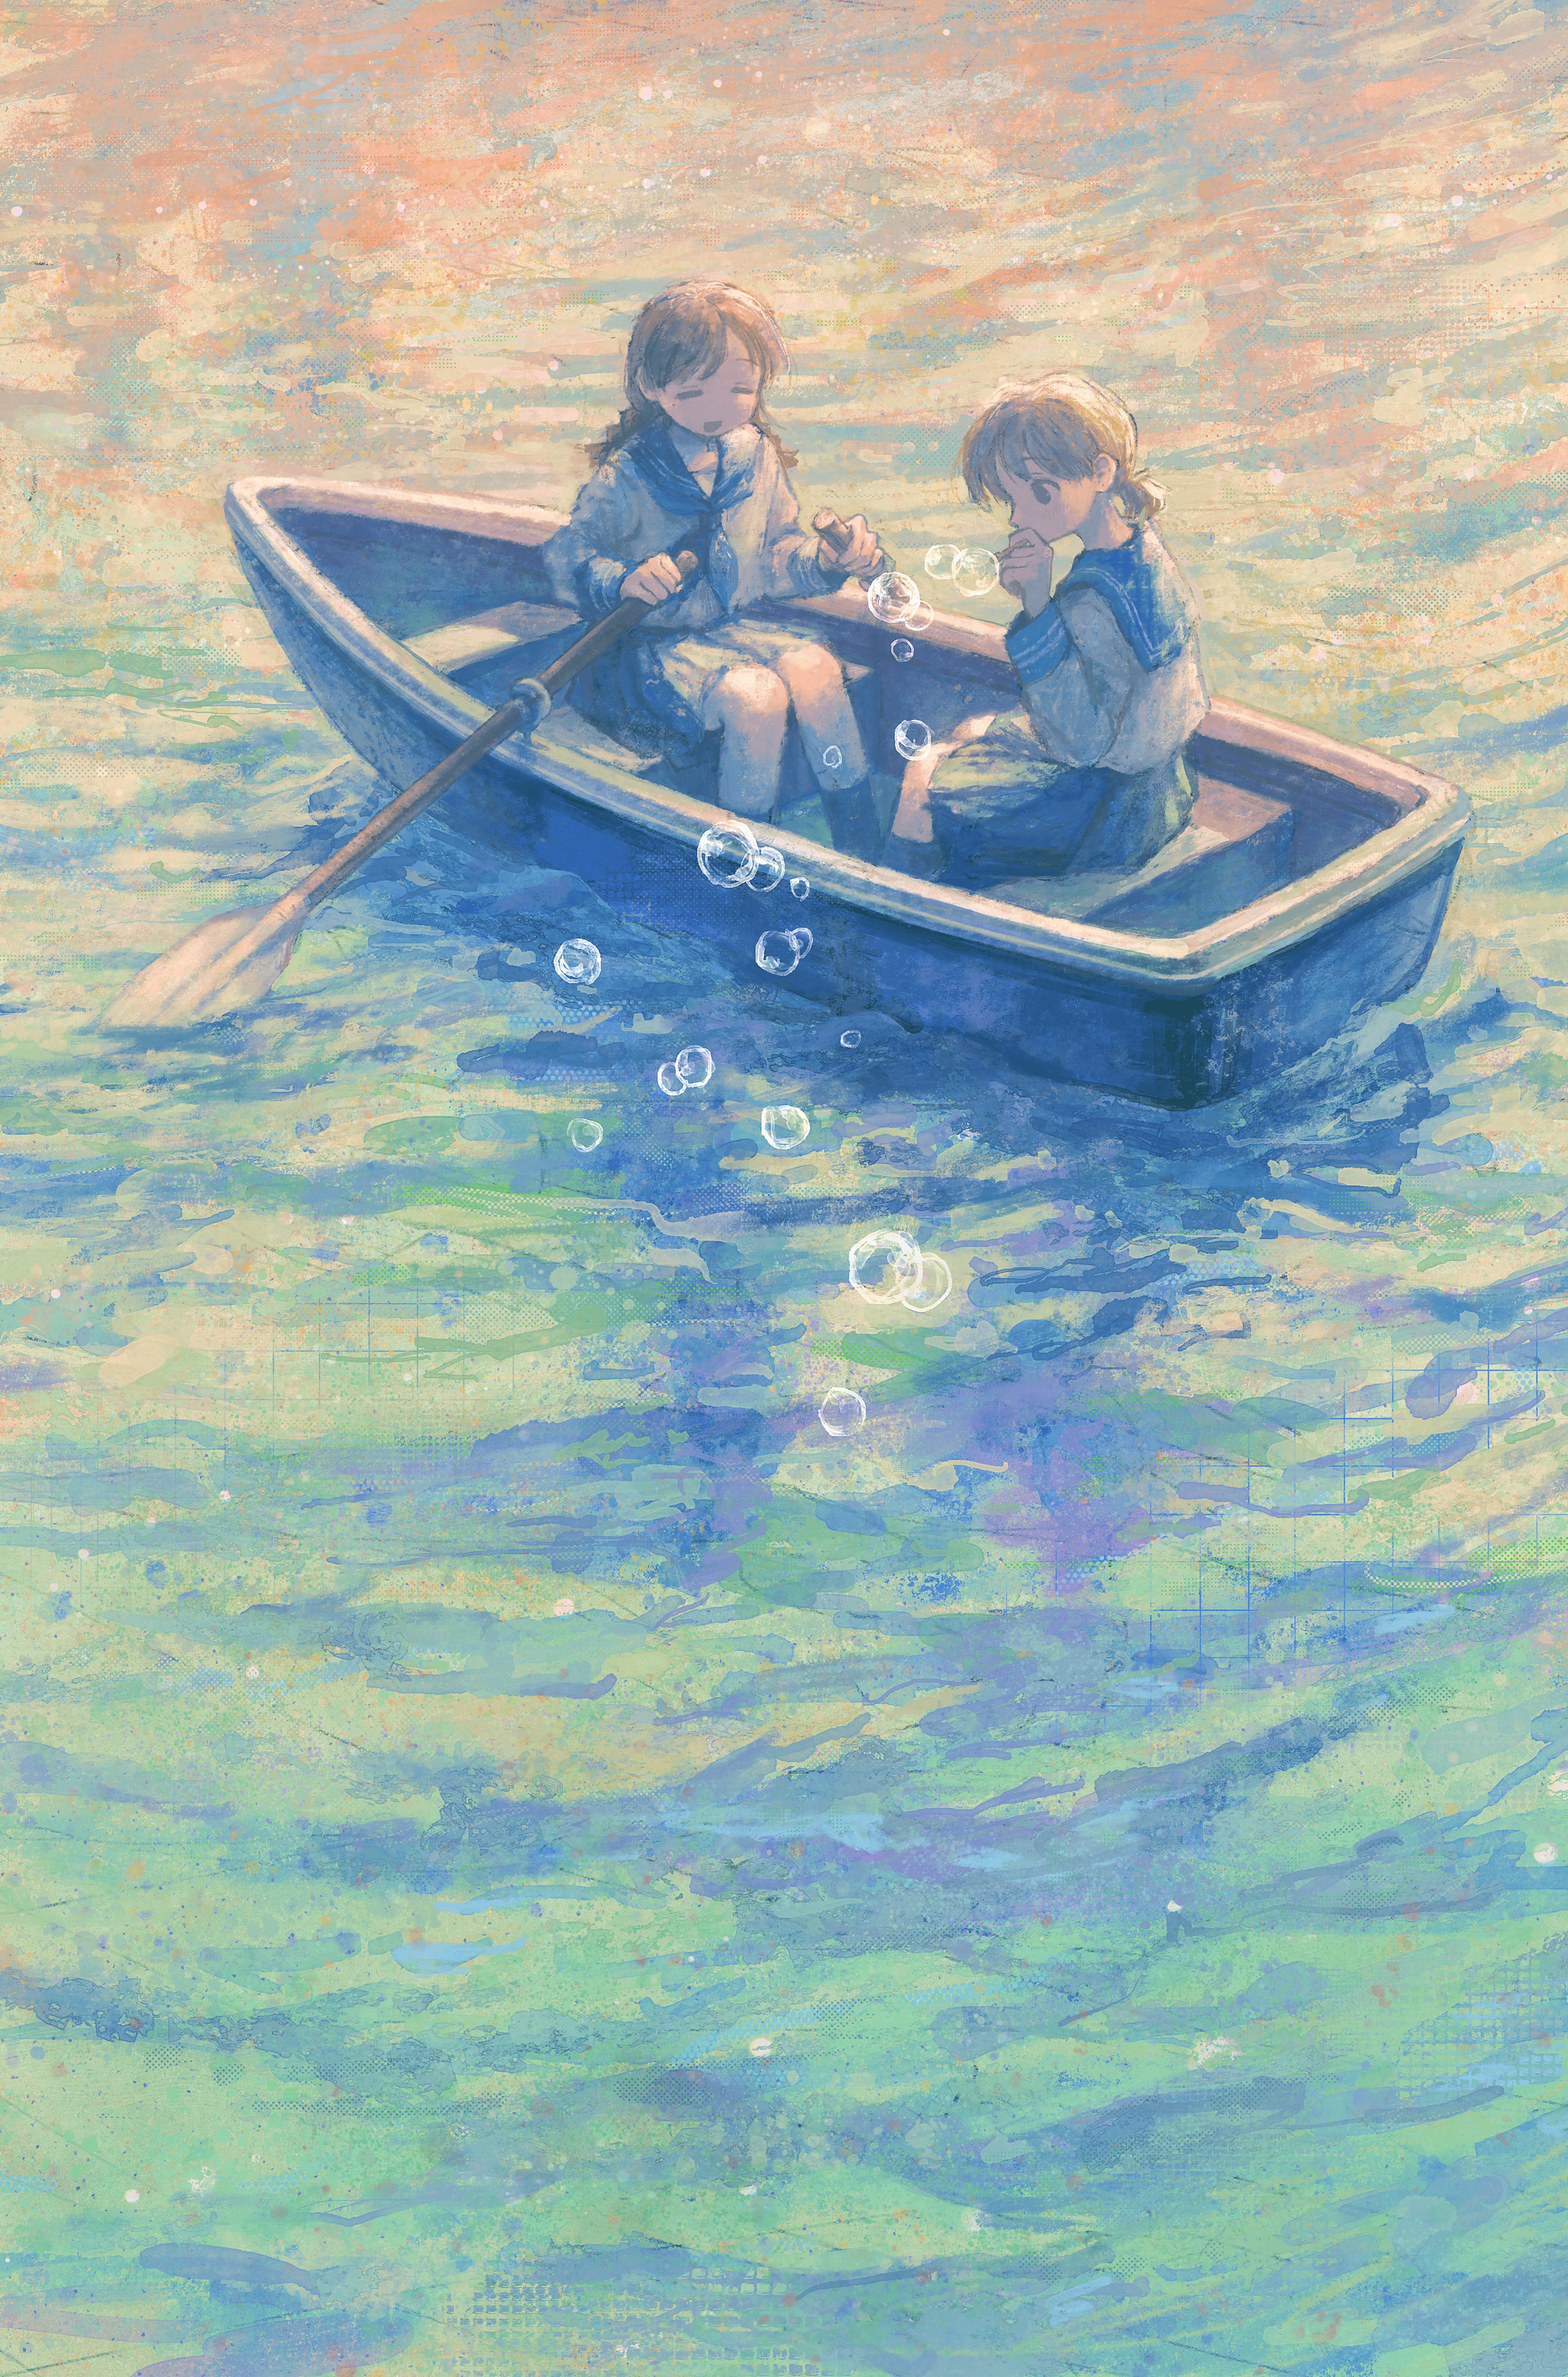 Two in a boat - Anime, Anime art, Original character, Seifuku, Girls, Schoolgirls, A boat, Bubble